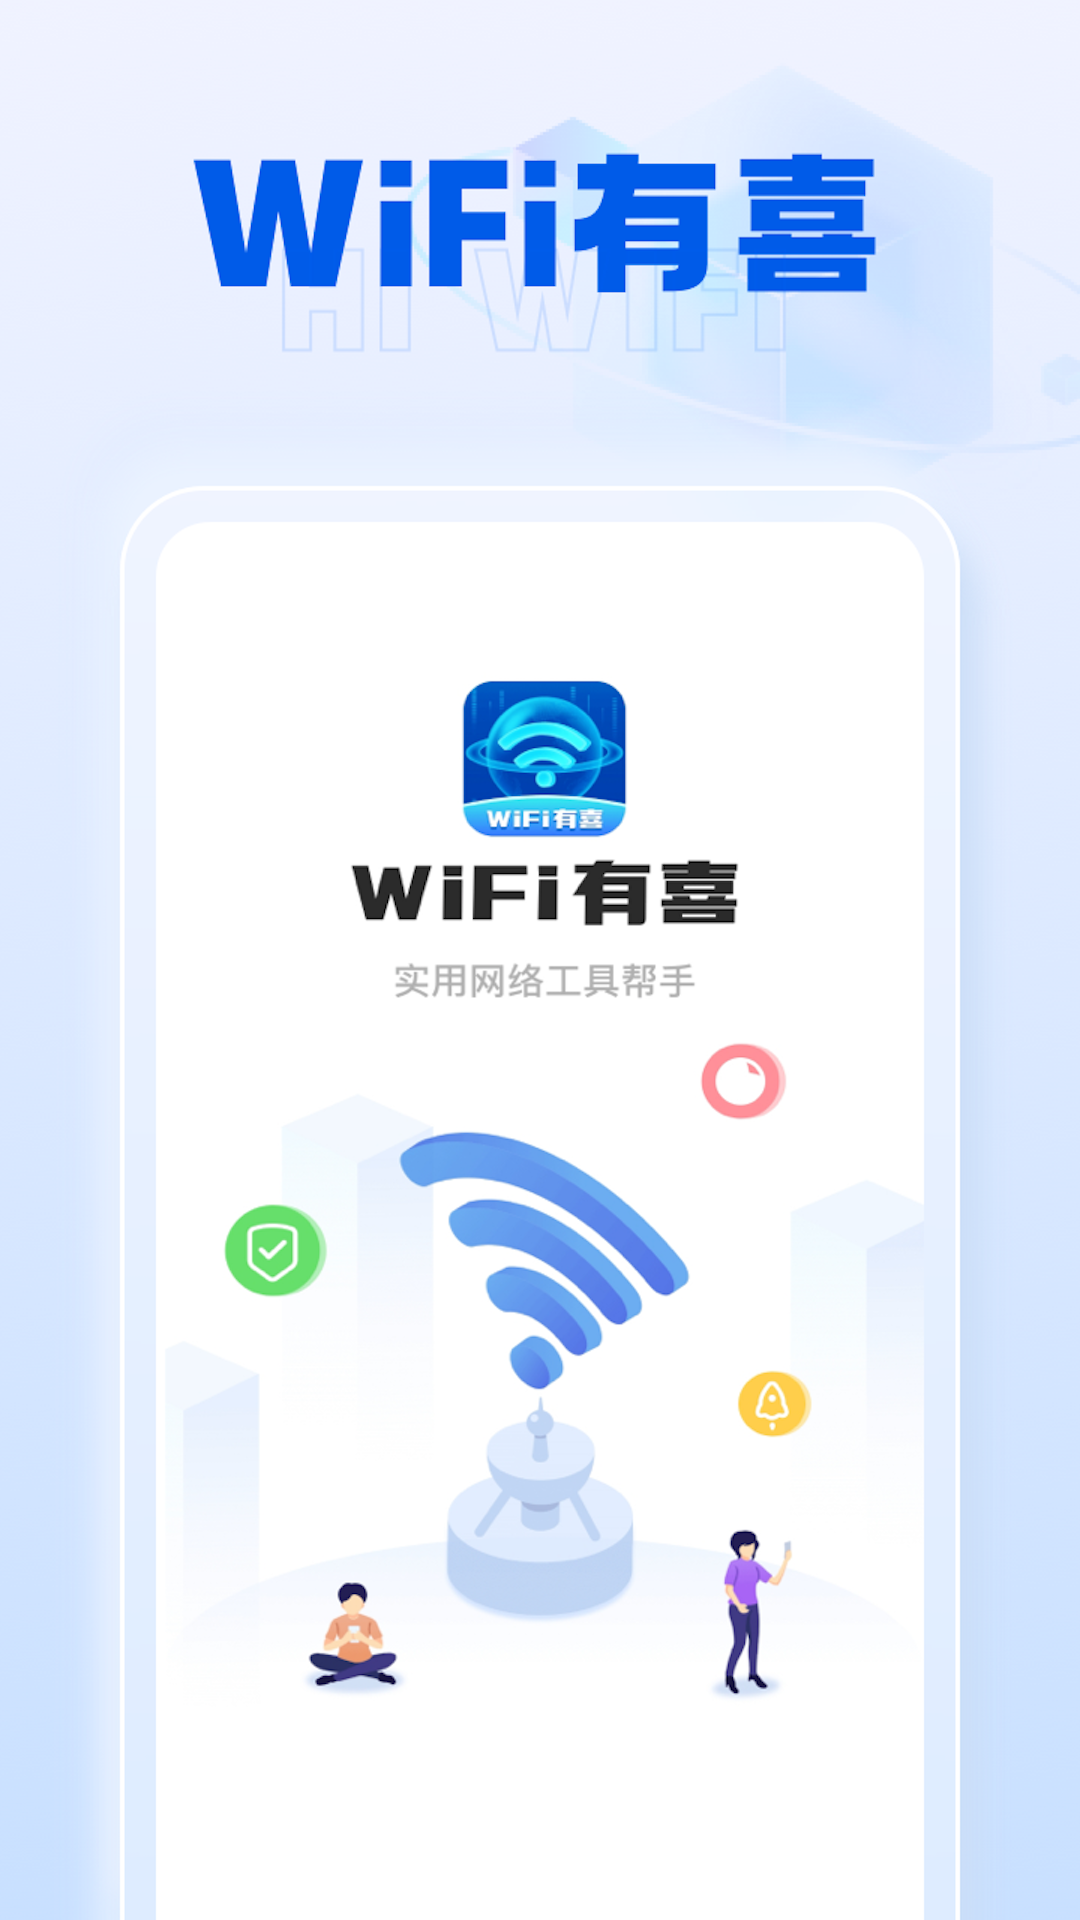 WiFi有喜网络测速APP官方版